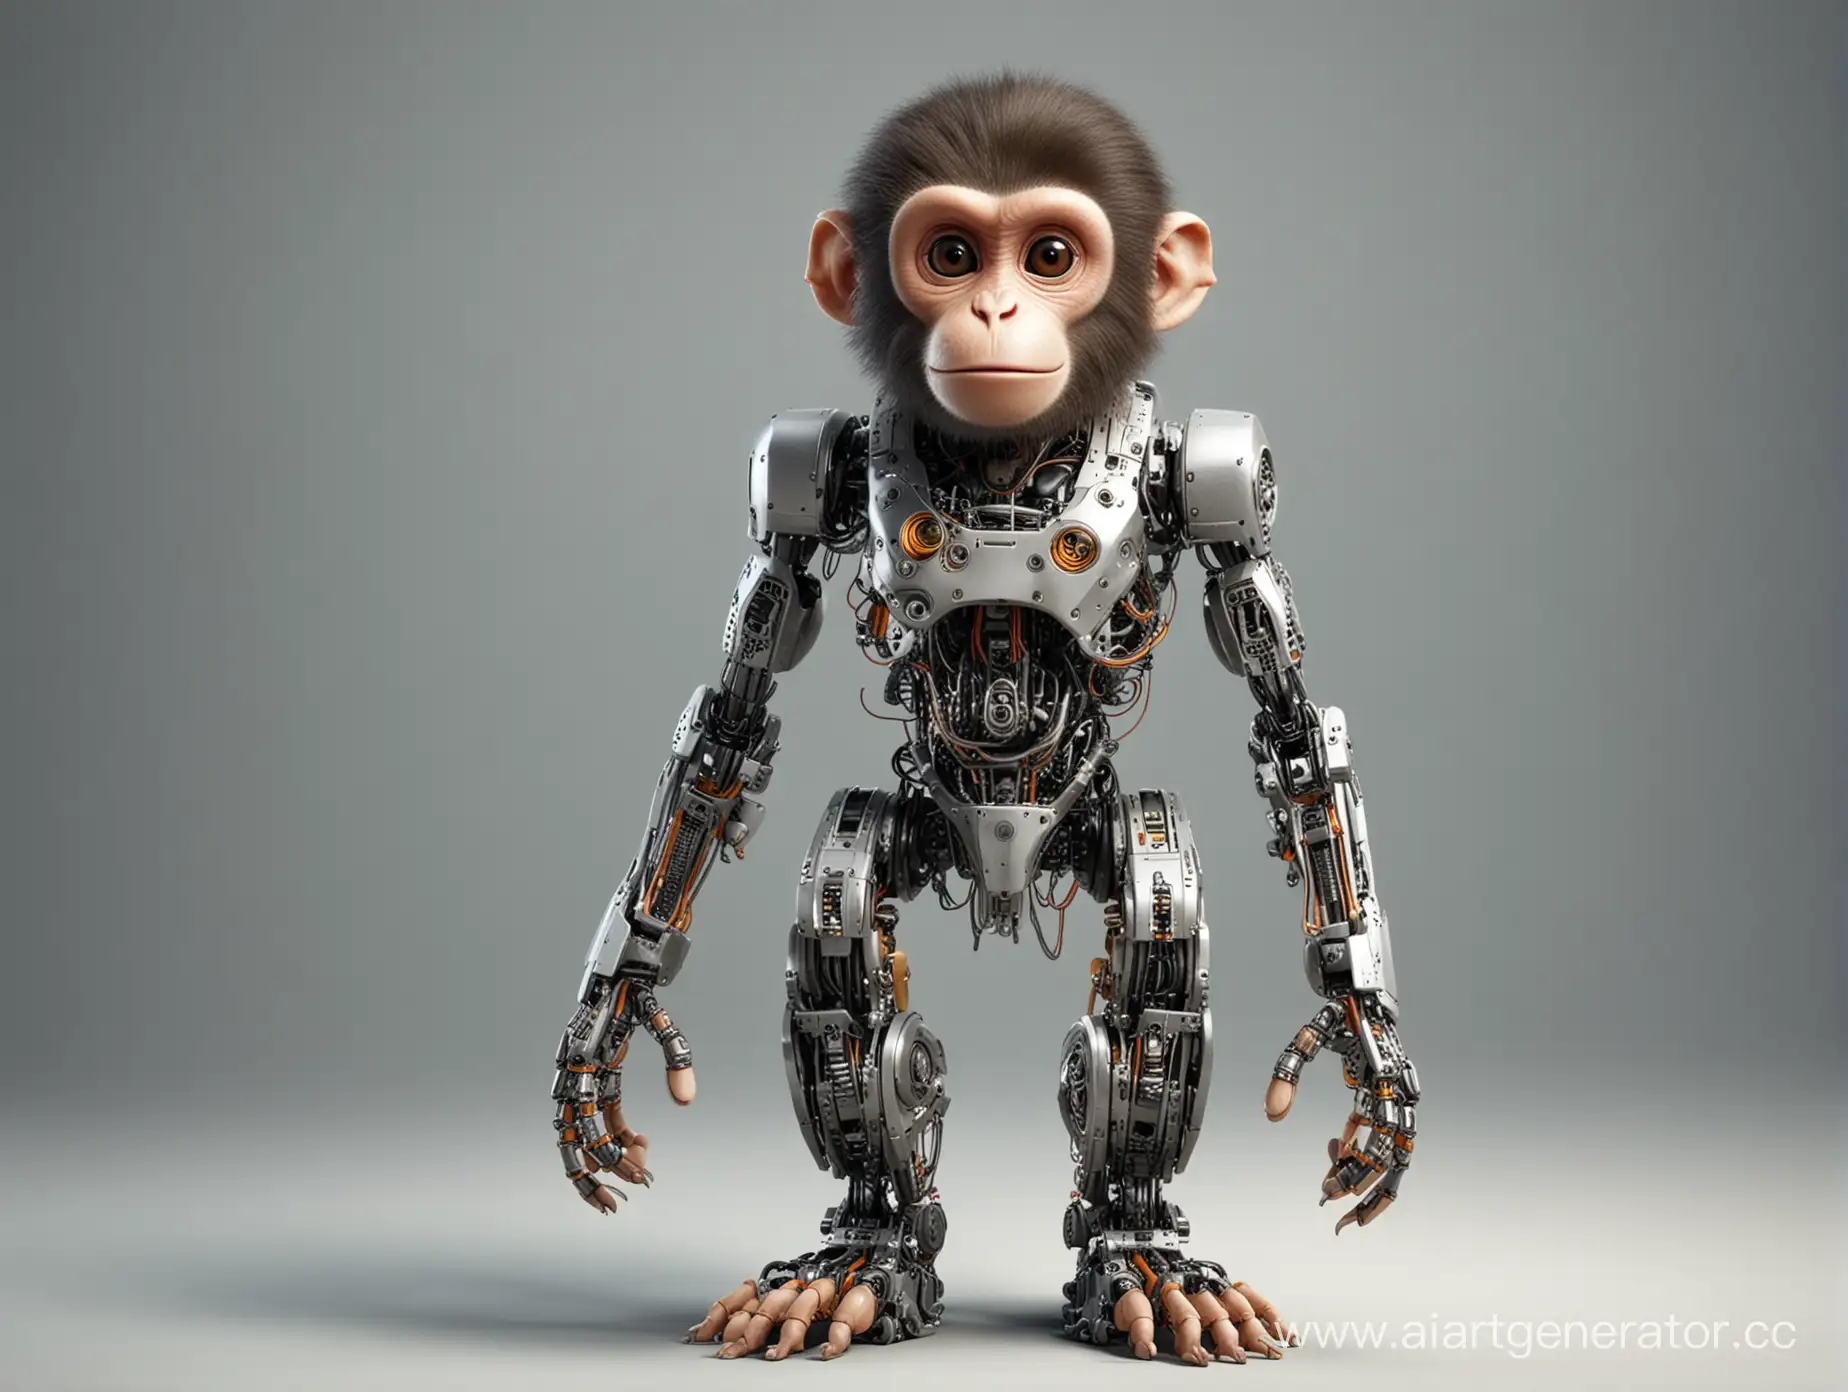 Mechanical-Primate-Robotic-Monkey-in-Futuristic-Setting